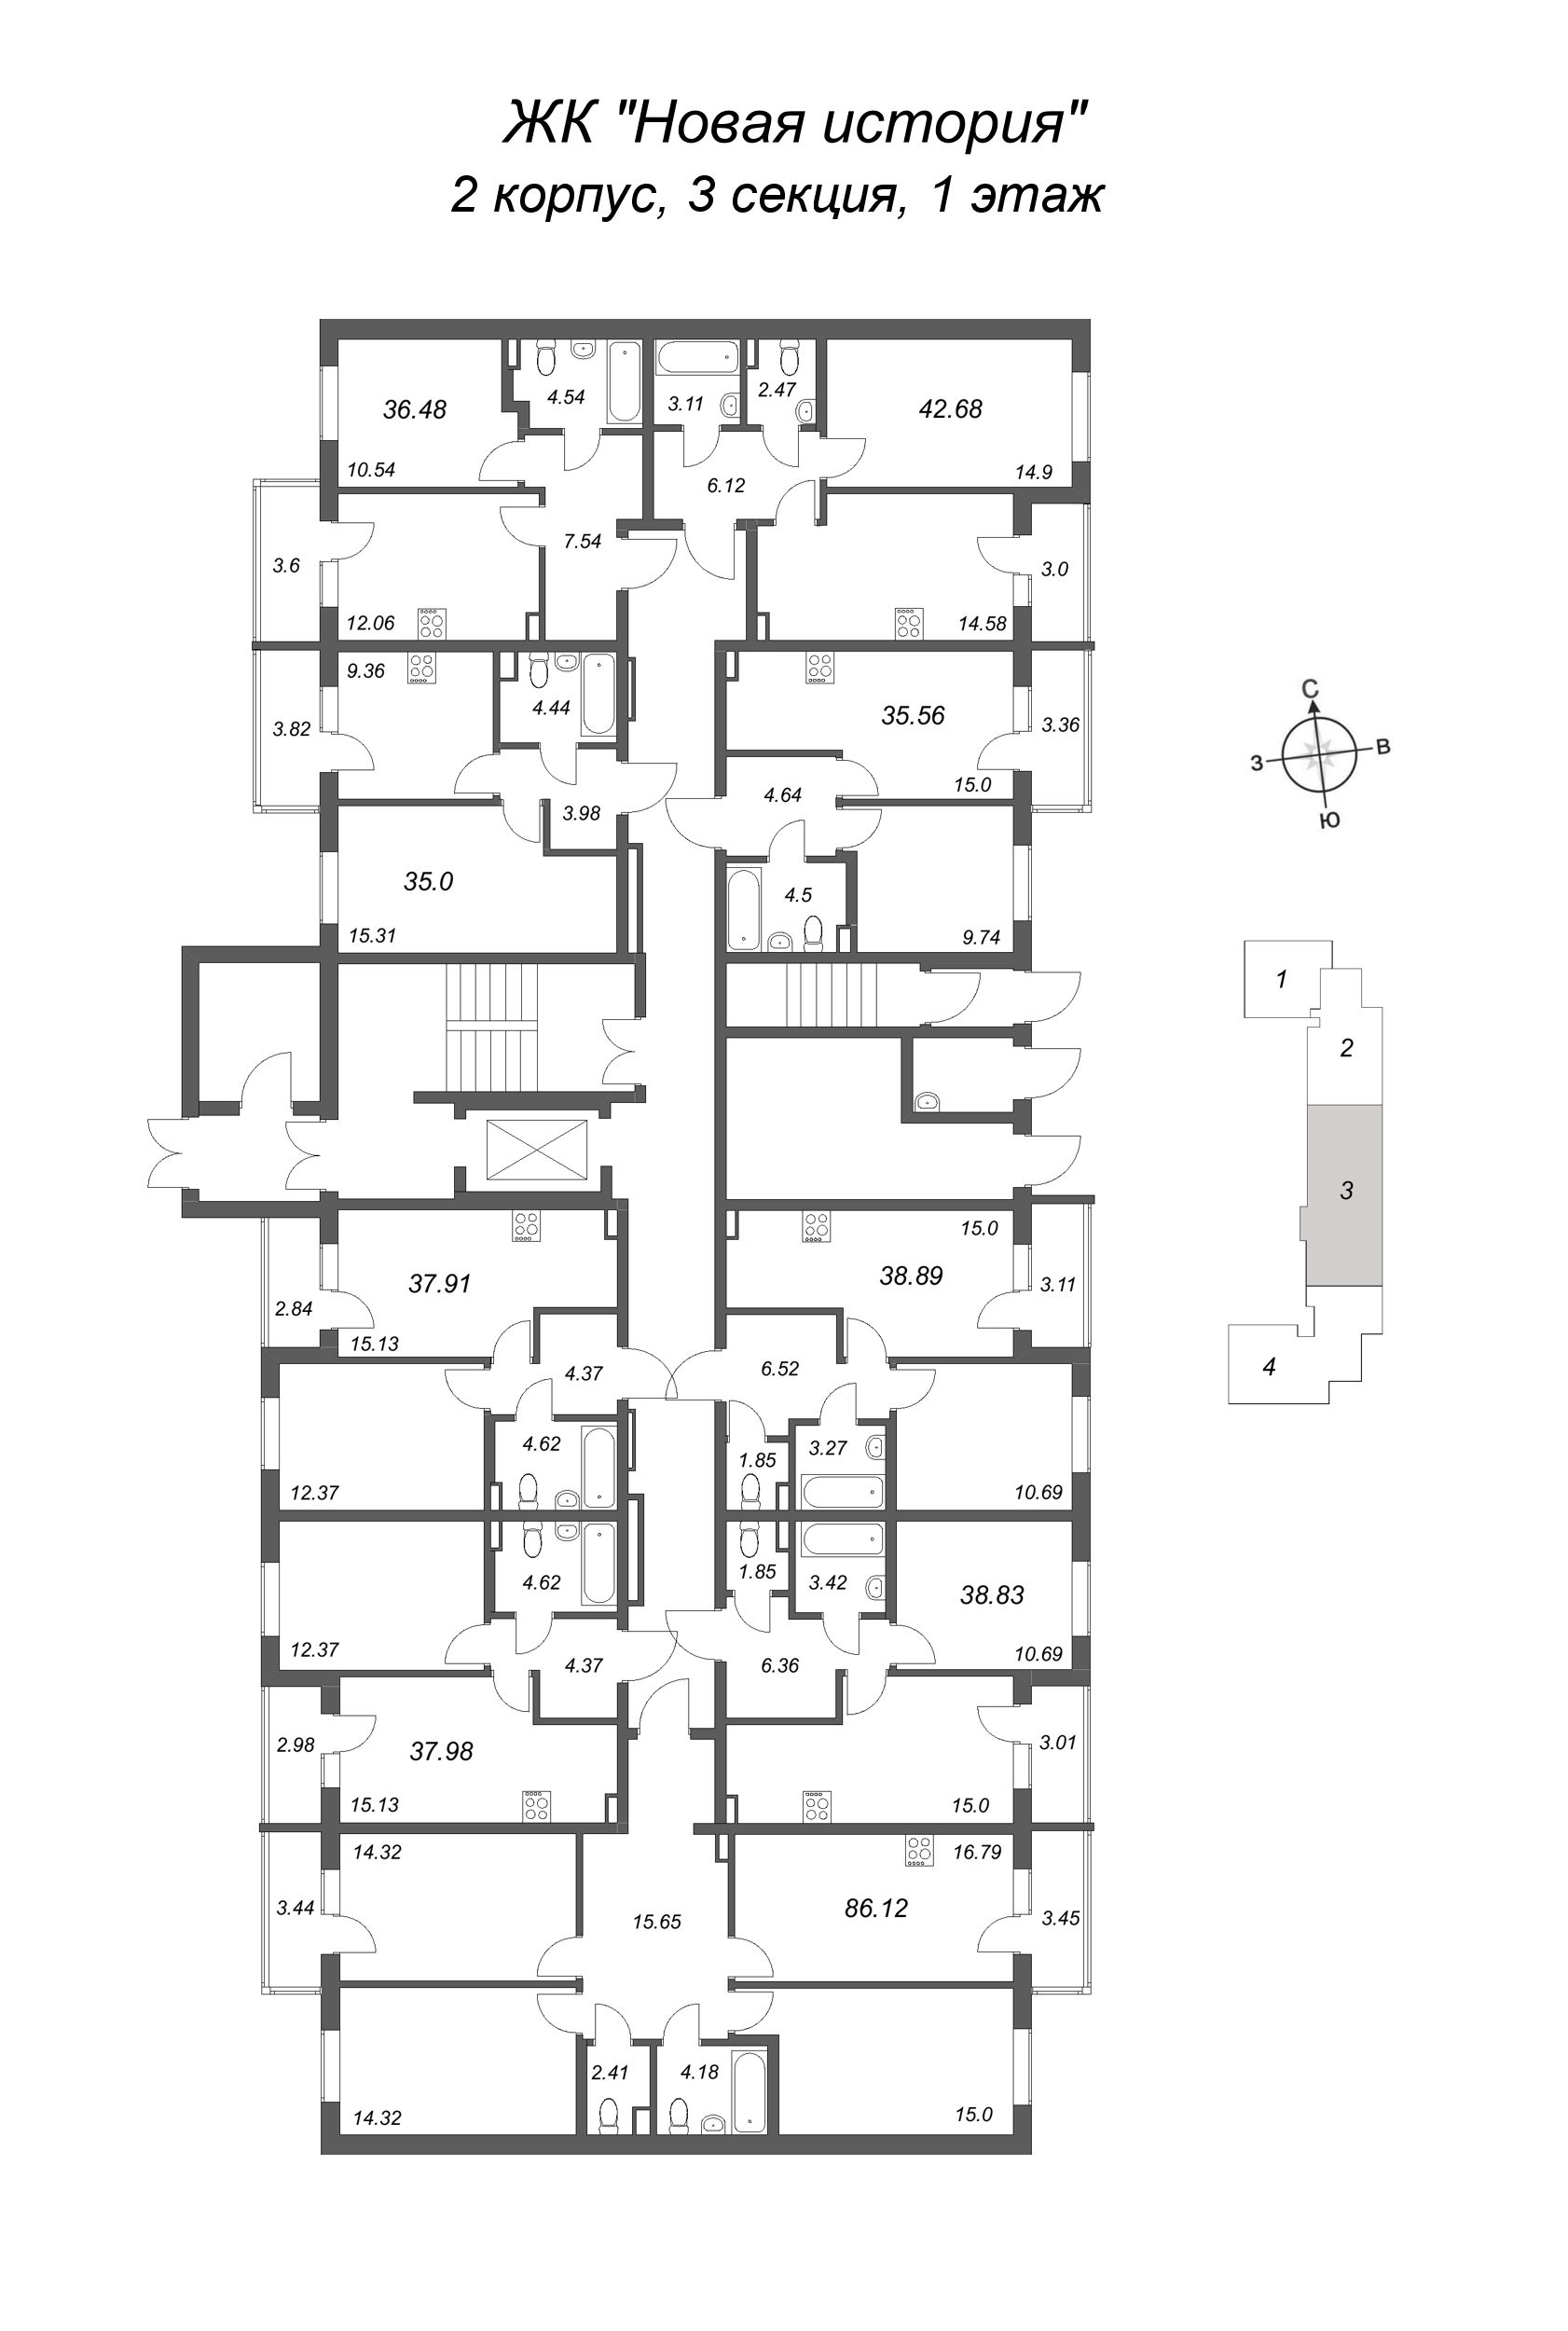 2-комнатная (Евро) квартира, 35.56 м² - планировка этажа